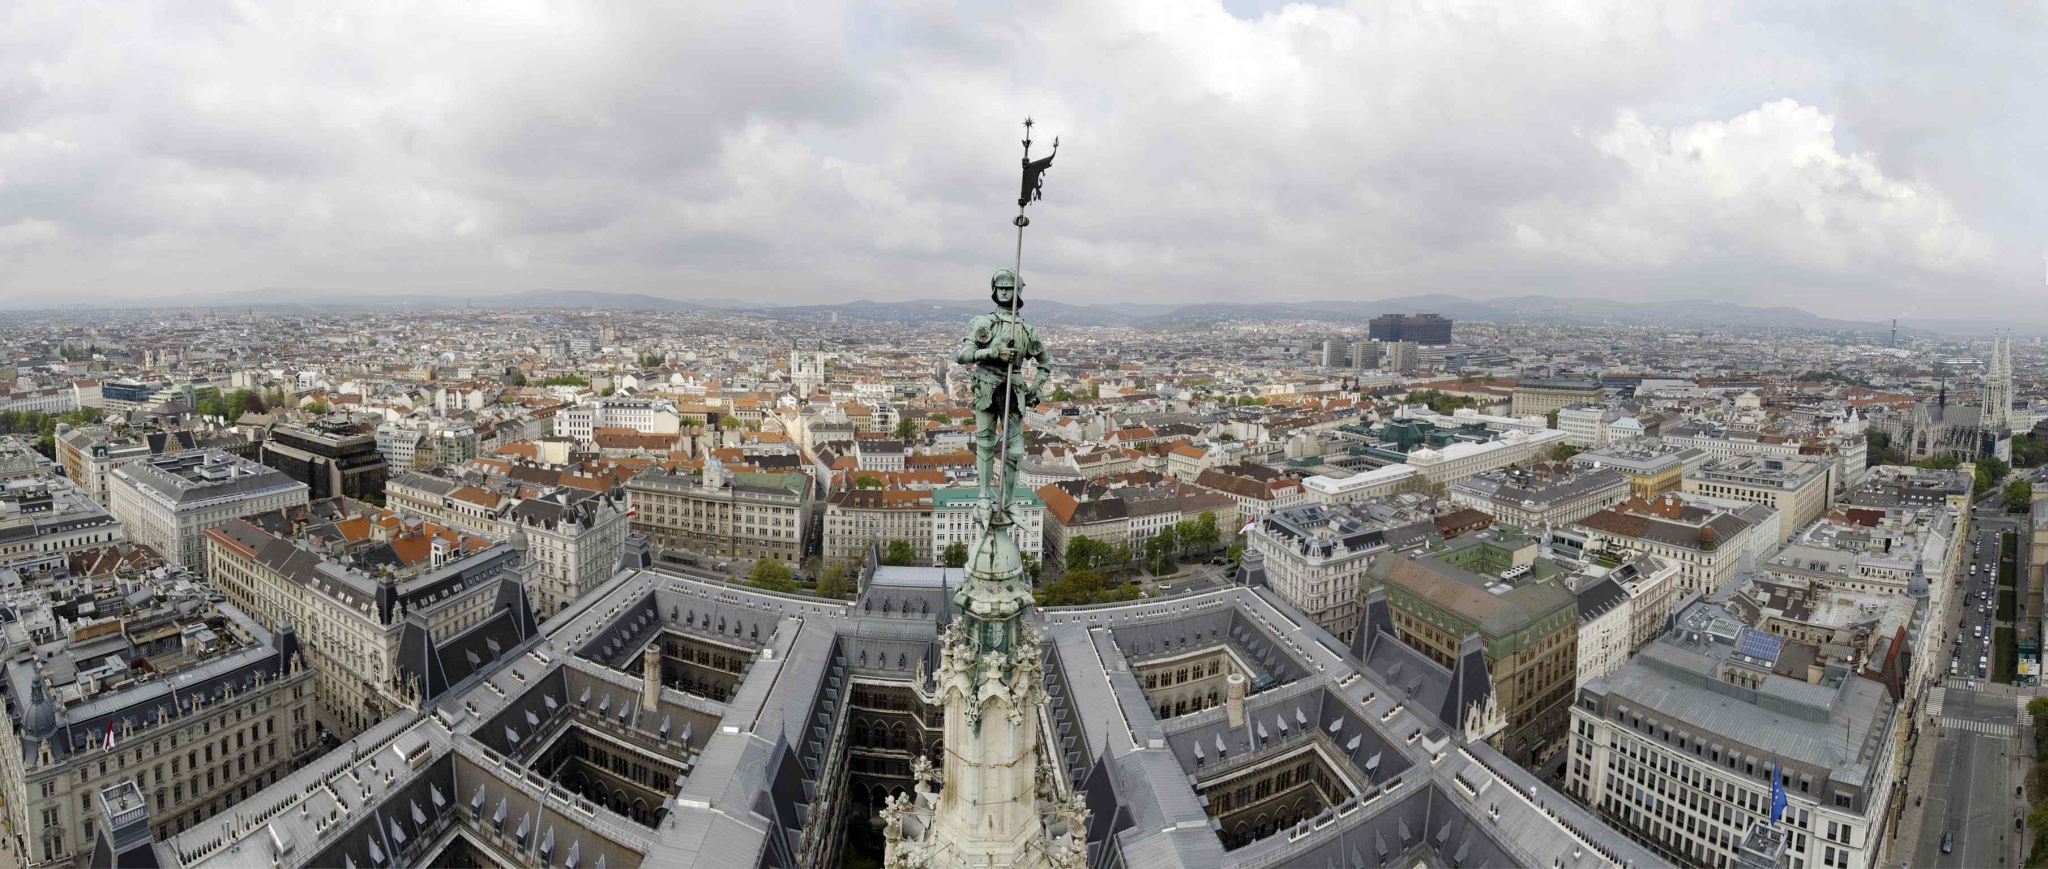  Vienna – a city of congress tourism